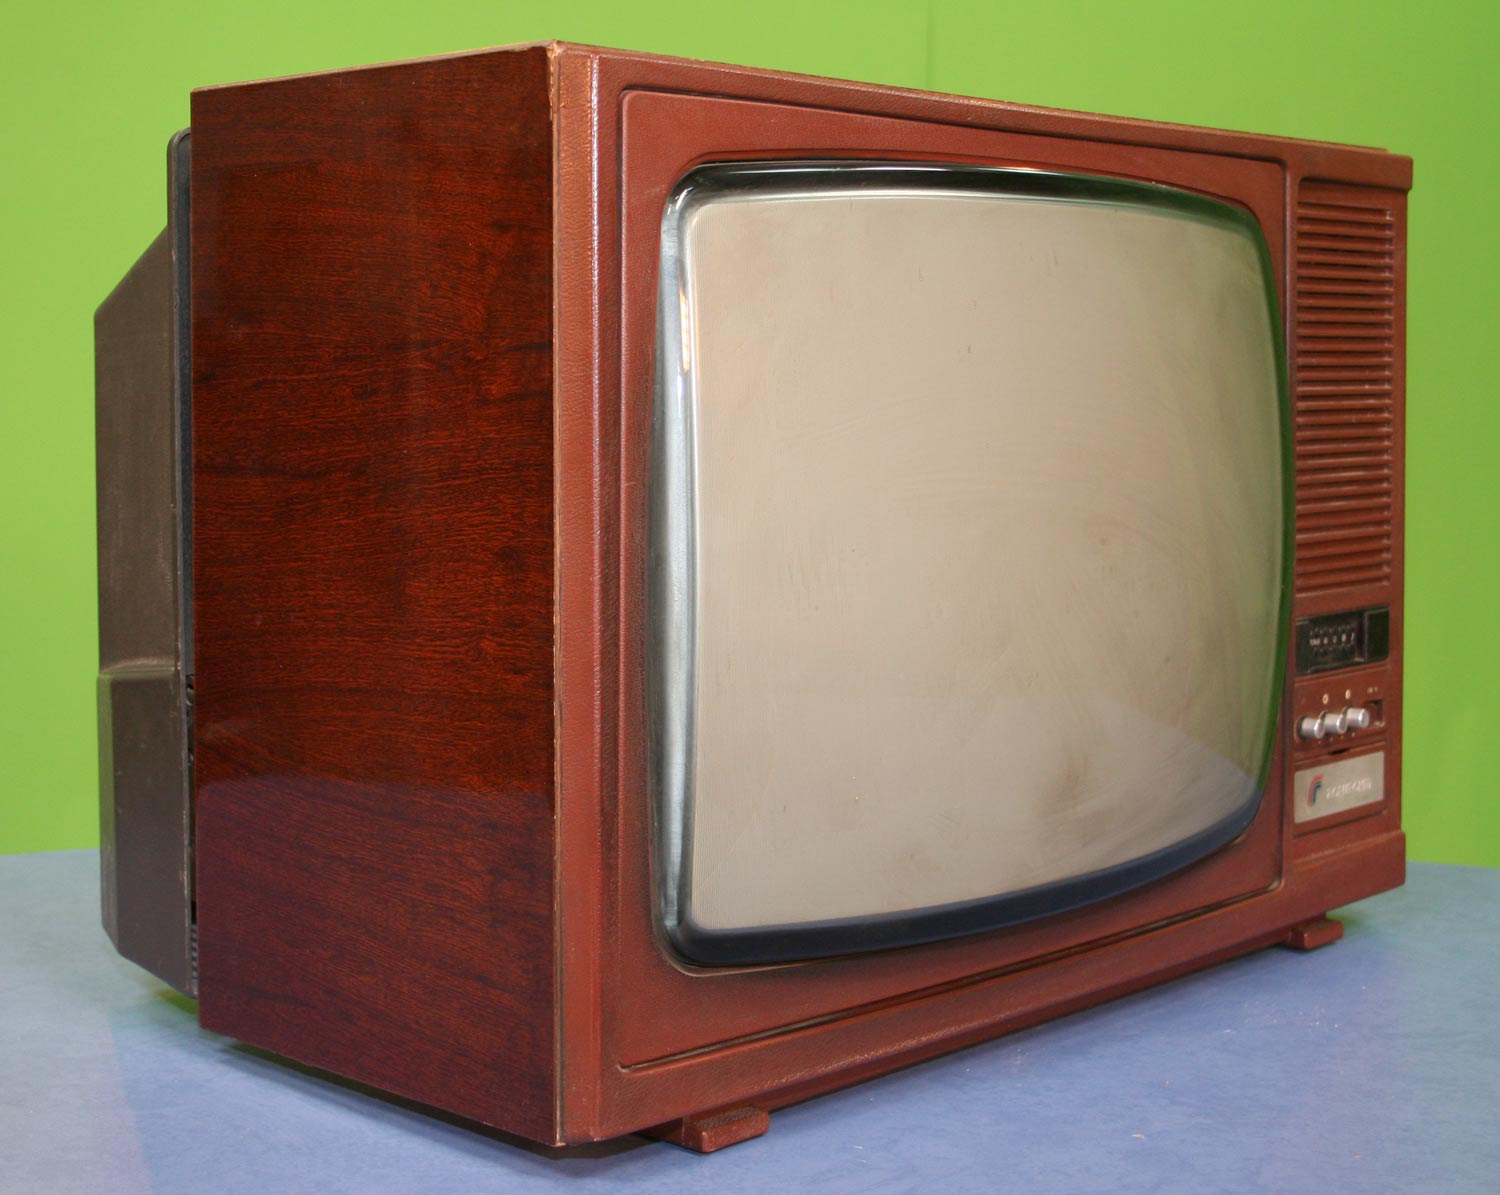 Телевизоры горизонт минск. Горизонт ц355. Телевизор янтарь ц355д. Советский телевизор Горизонт ц355. Телевизор Горизонт ц257д.